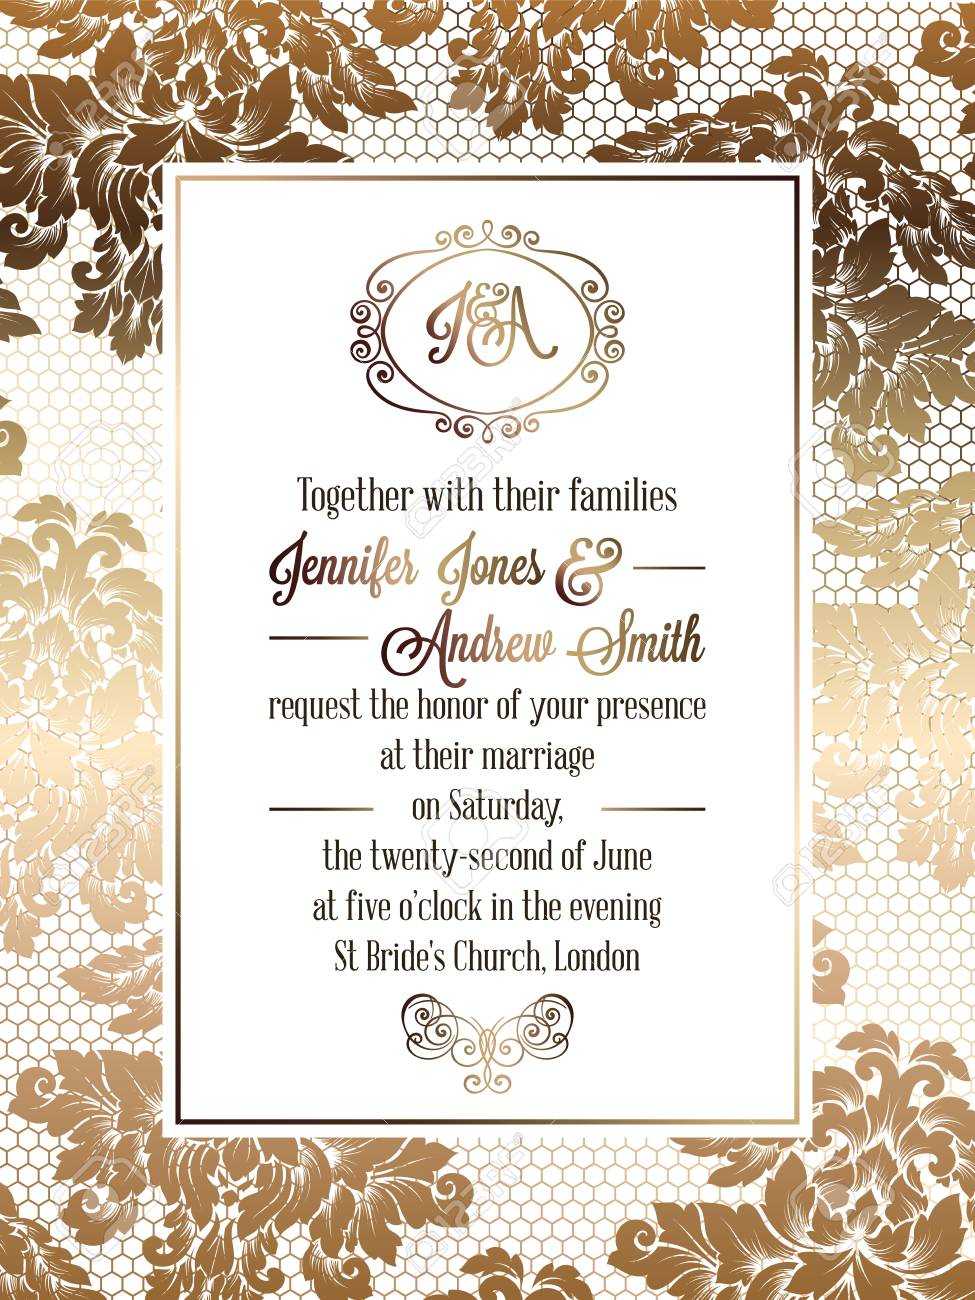 Vintage Baroque Style Wedding Invitation Card Template.. Elegant.. With Invitation Cards Templates For Marriage